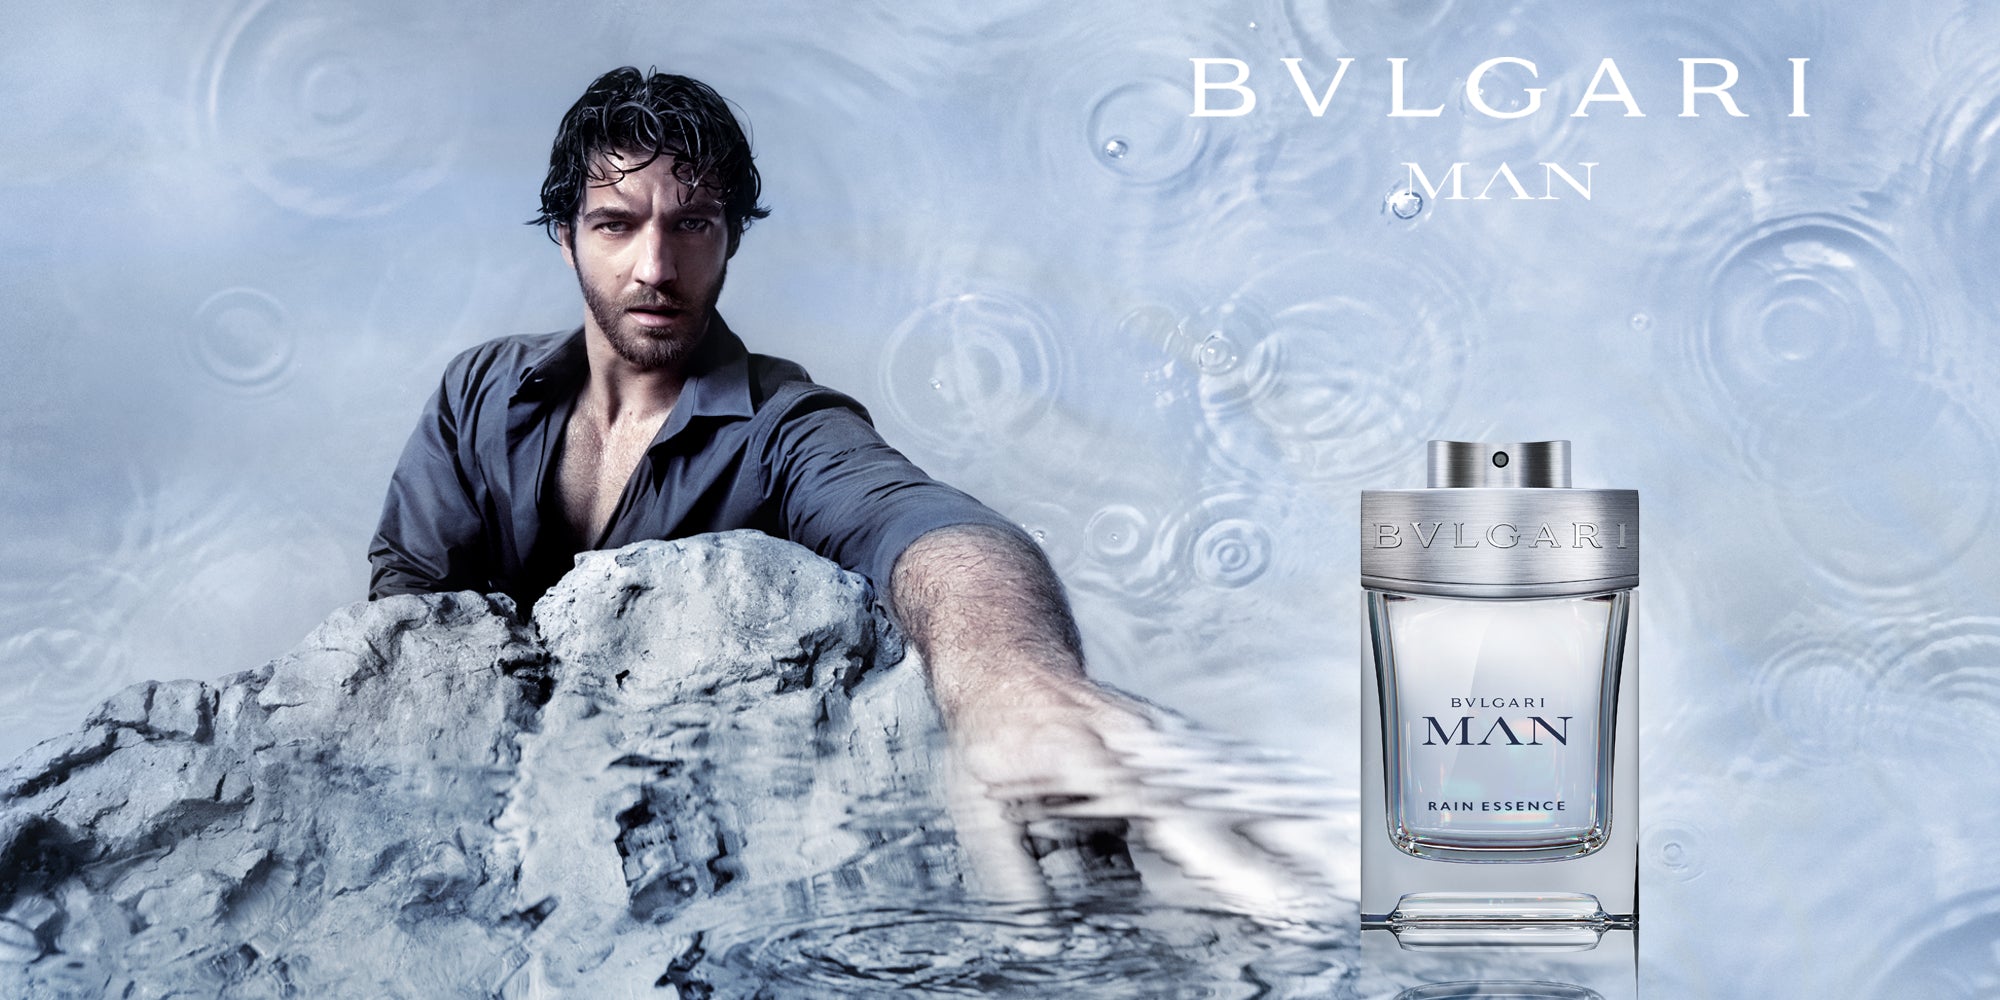 Bvlgari Blv Pour Homme review  Perfume adverts, Perfume ad, Bvlgari blv